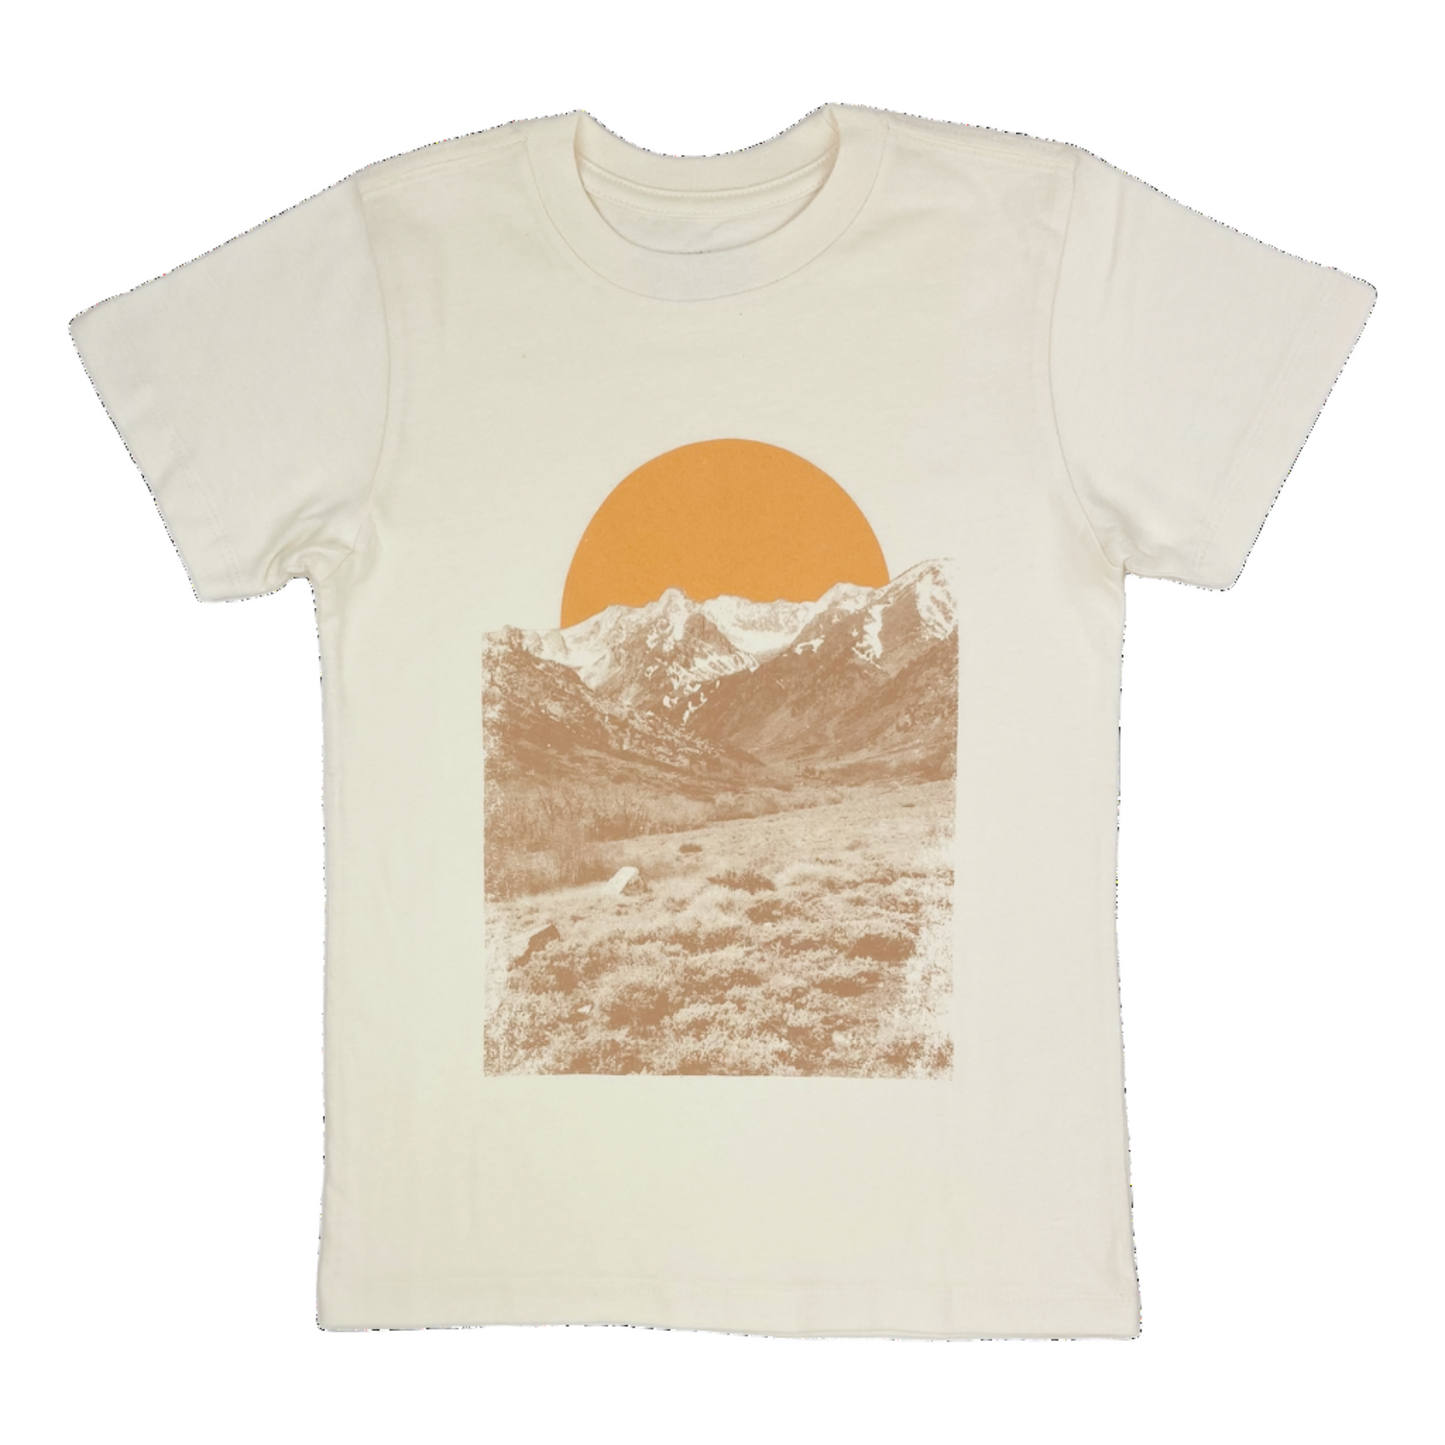 Mountains Calling Tee Shirt: Natural